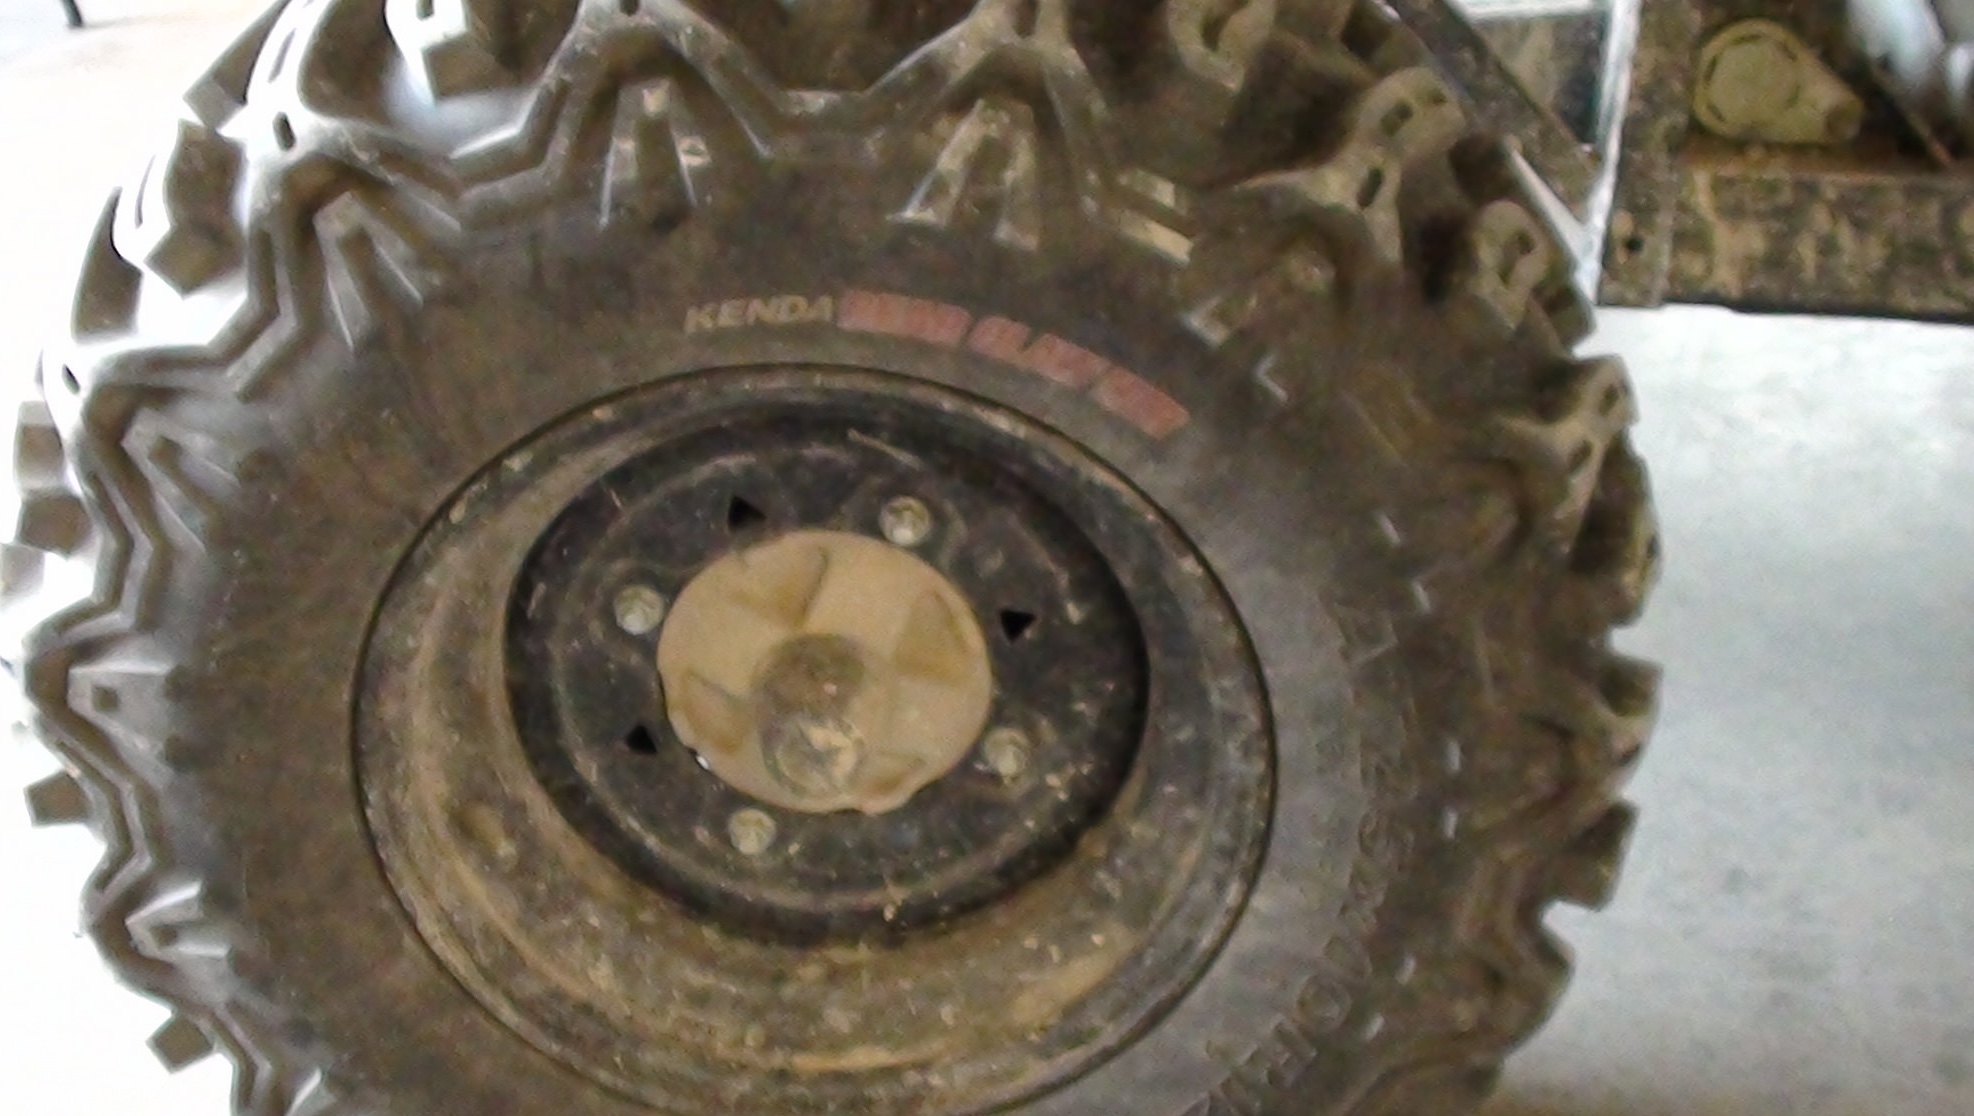 A close up photo of an ATV tire.